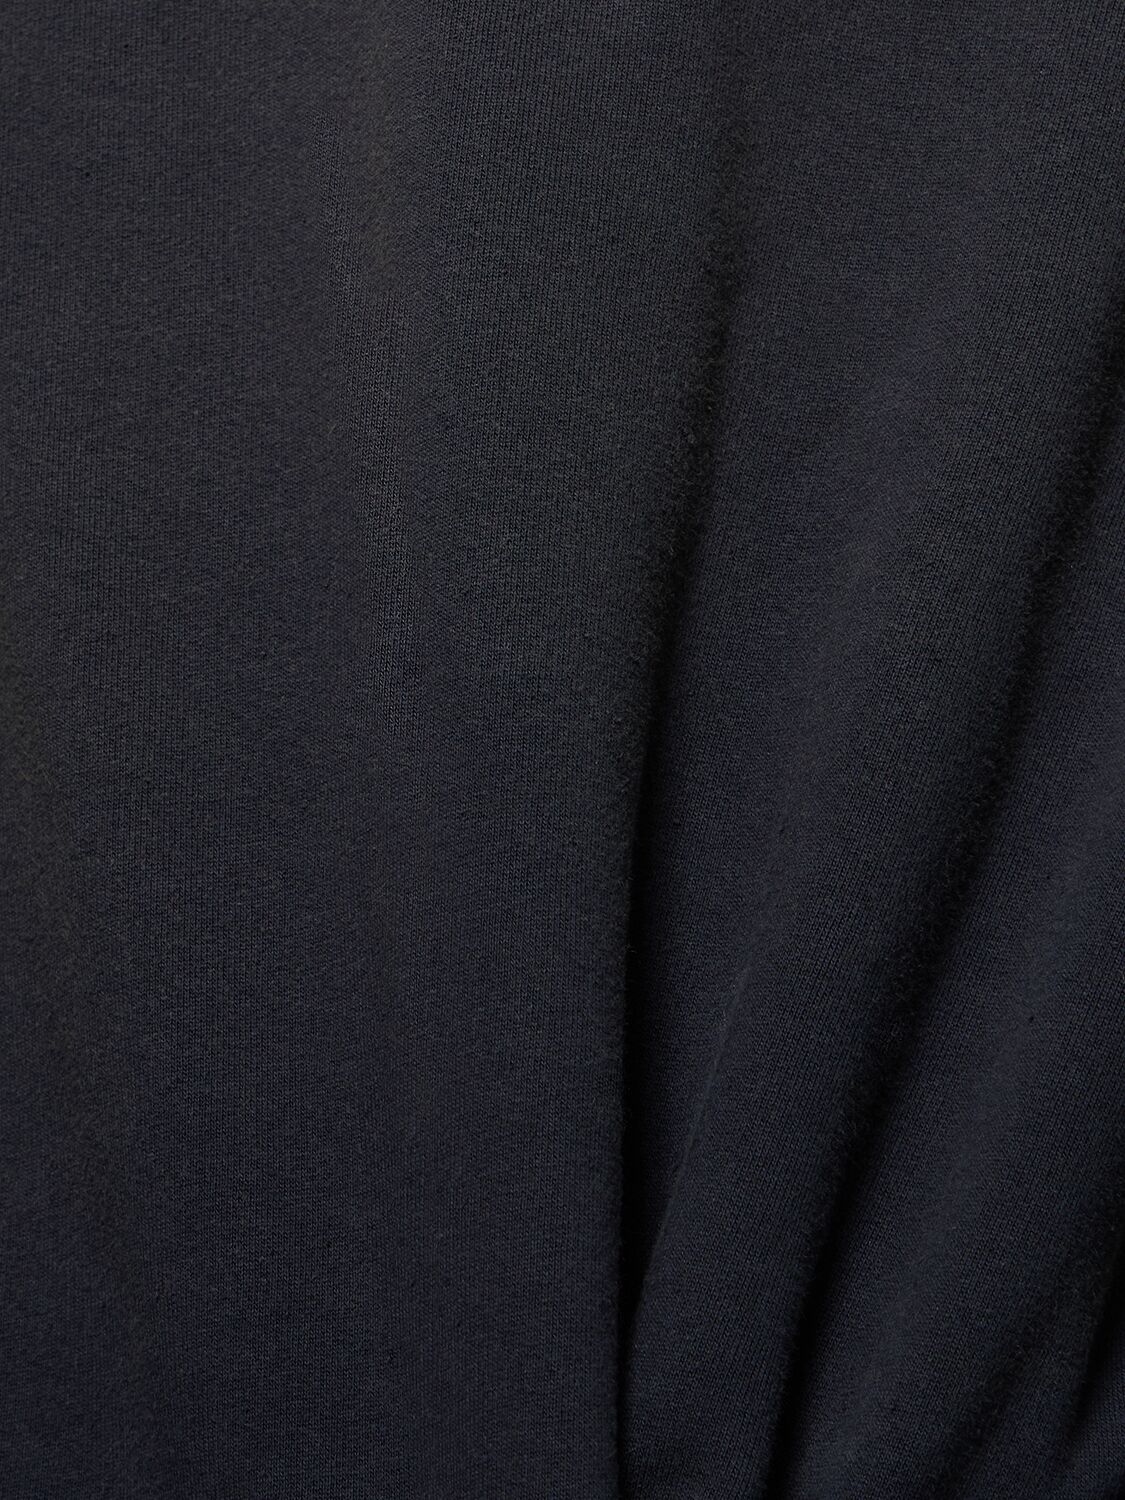 Shop Acne Studios Franziska Cotton Logo Sweatshirt In Black